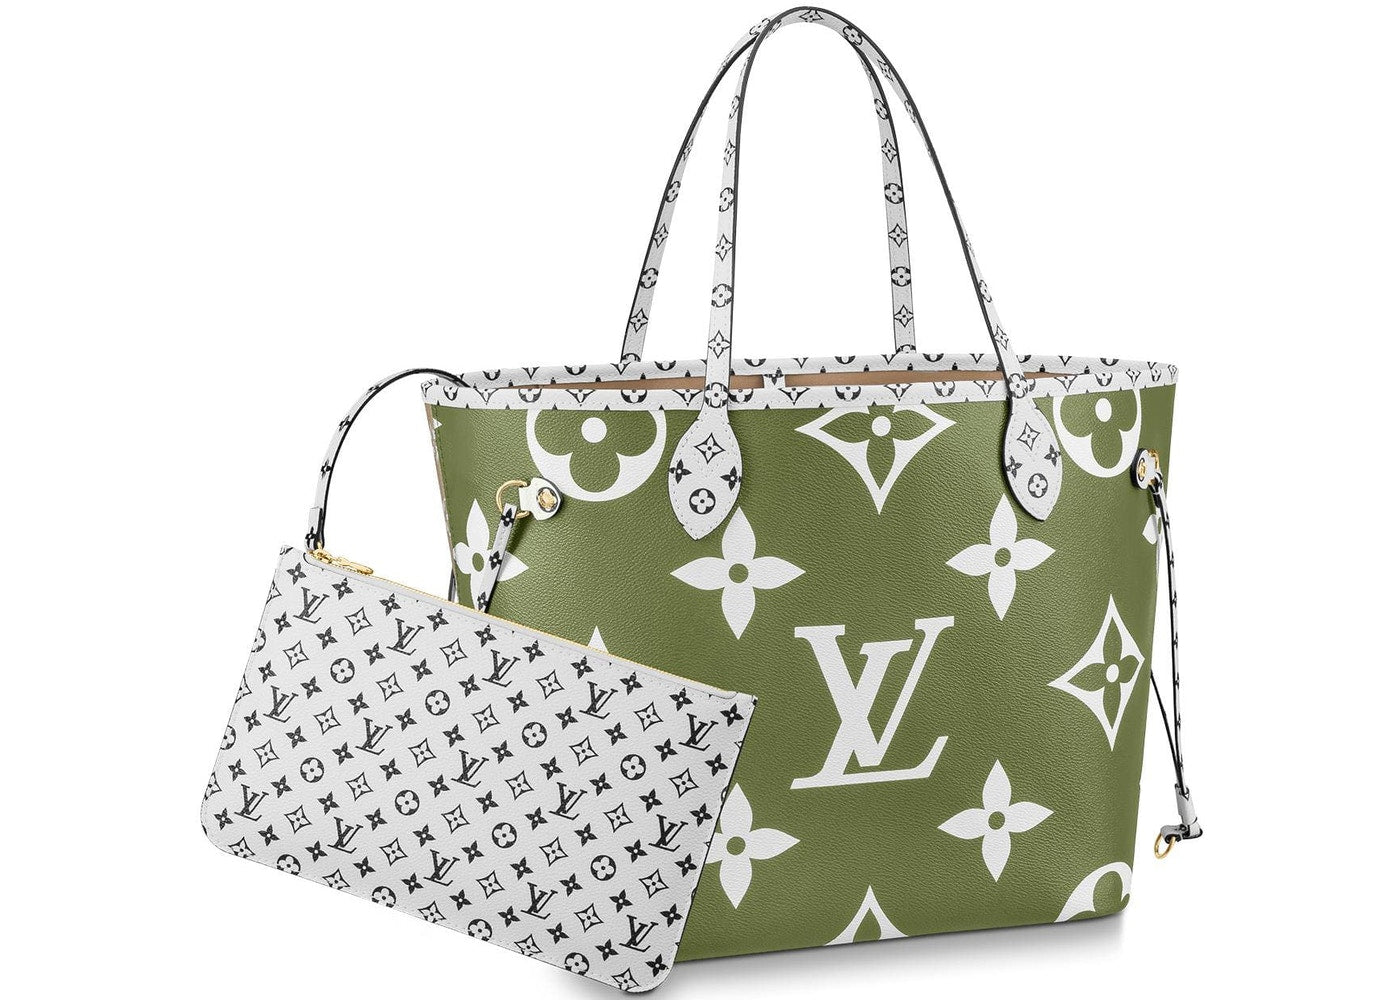 Top 5 Designer Handbags Every Woman Should Own